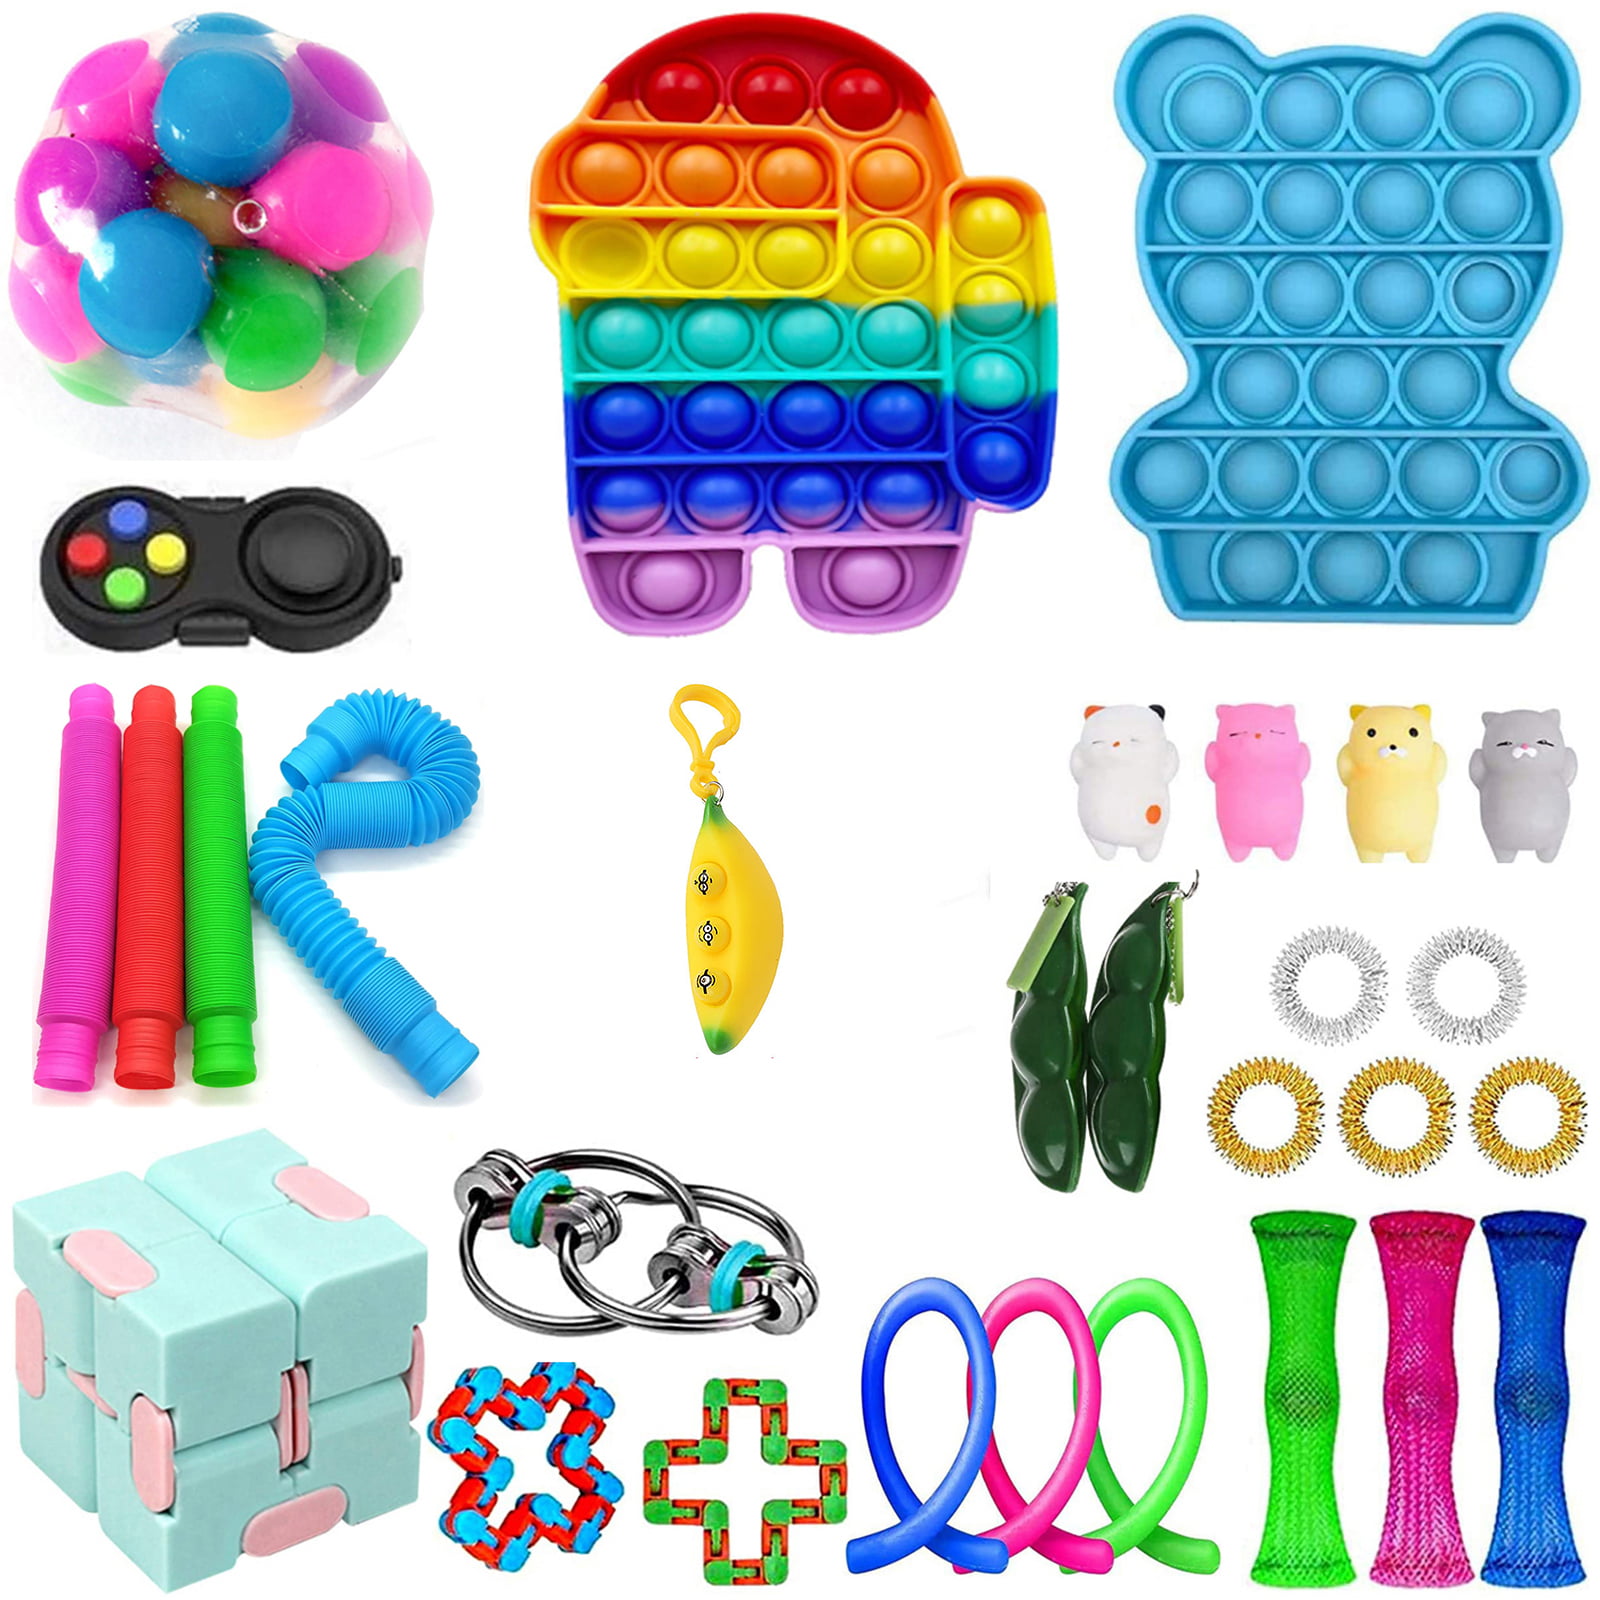 Details about   Fidget Toys Set Sensory Tools Bundle Stress Relief Hand Kids Adults Toy new* 